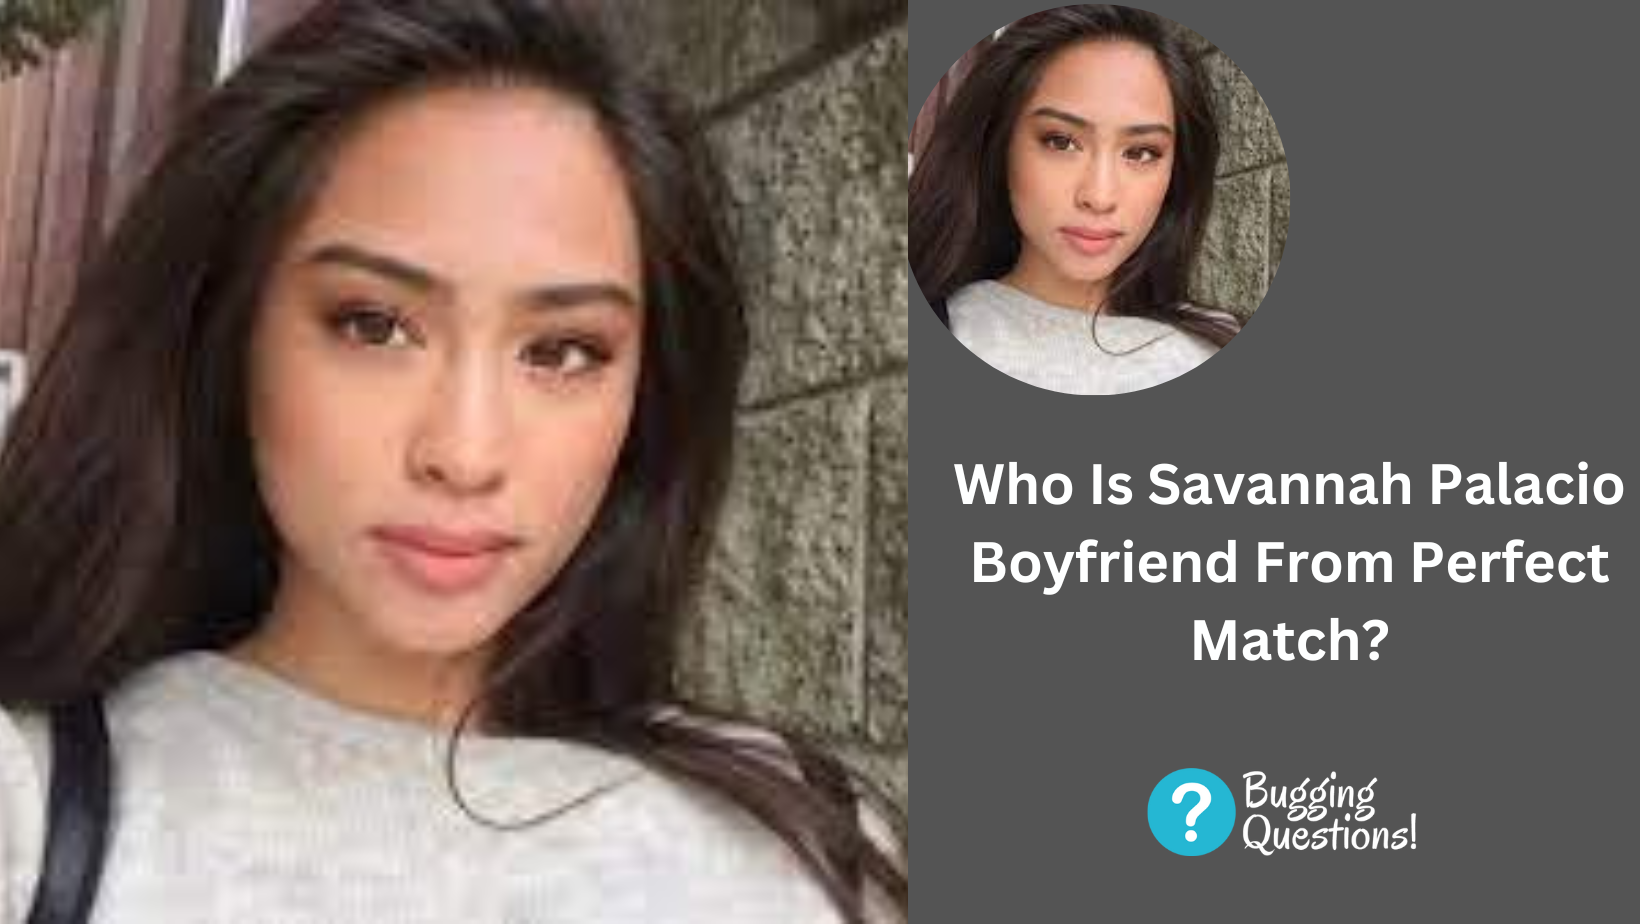 Who Is Savannah Palacio Boyfriend From Perfect Match?